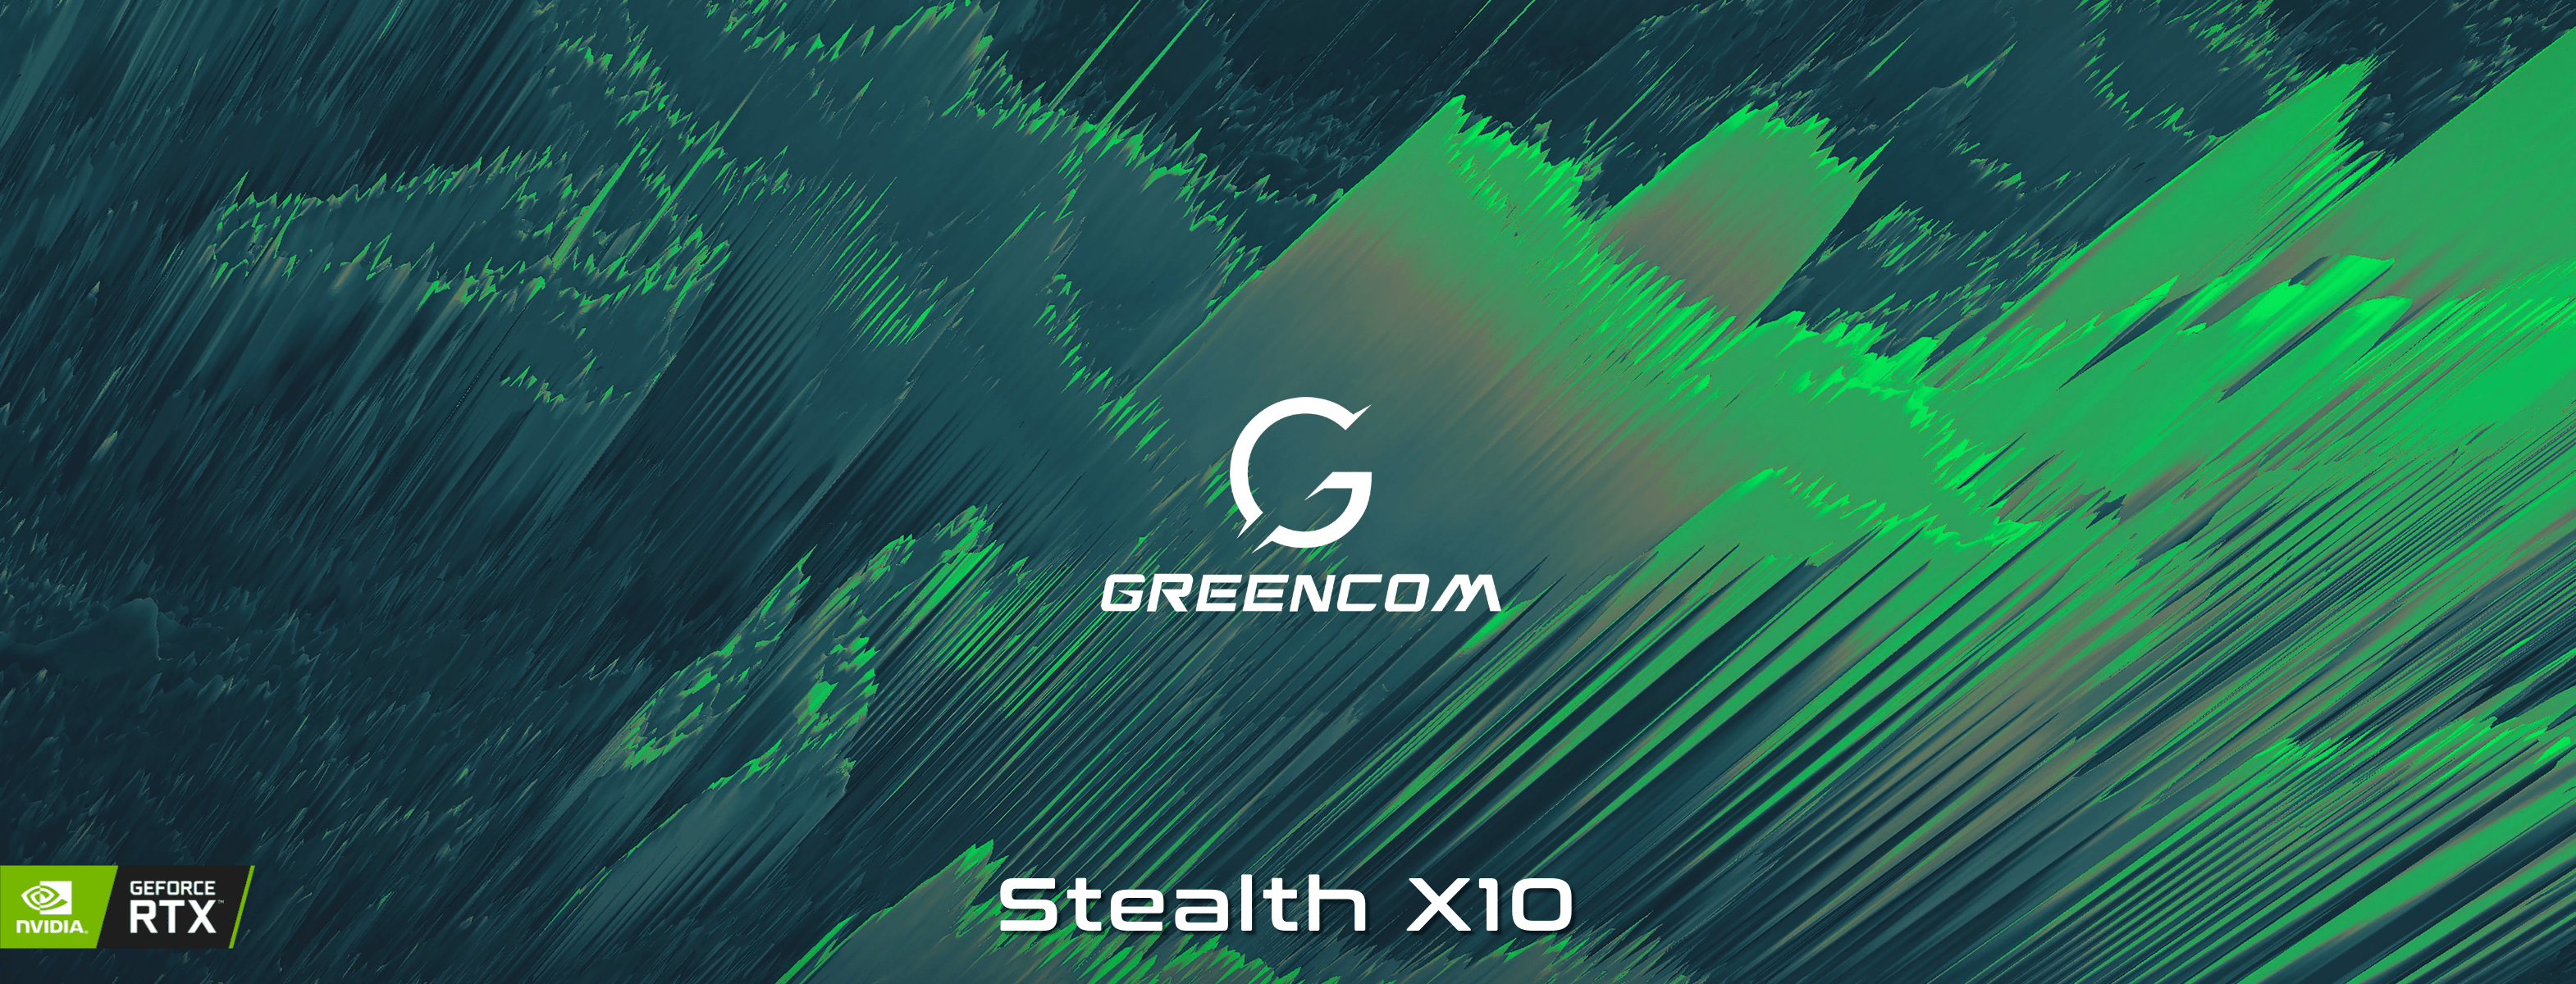 Stealth X10